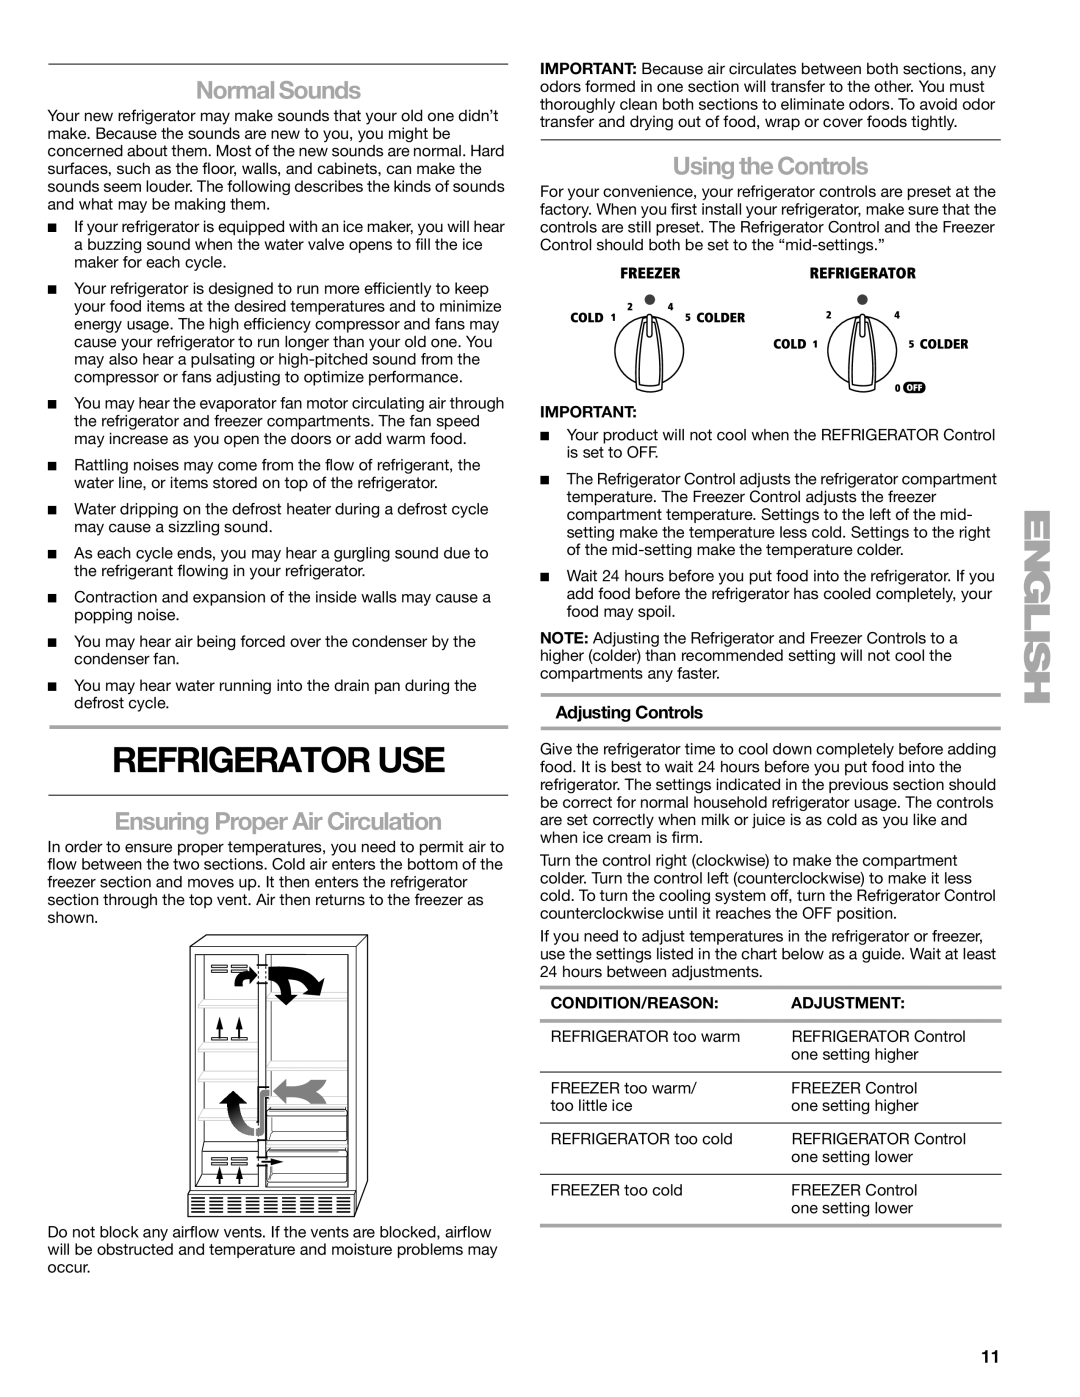 Sears T1KB2/T1RFKB2 manual Refrigerator Use, Normal Sounds, Ensuring Proper Air Circulation, Using the Controls 